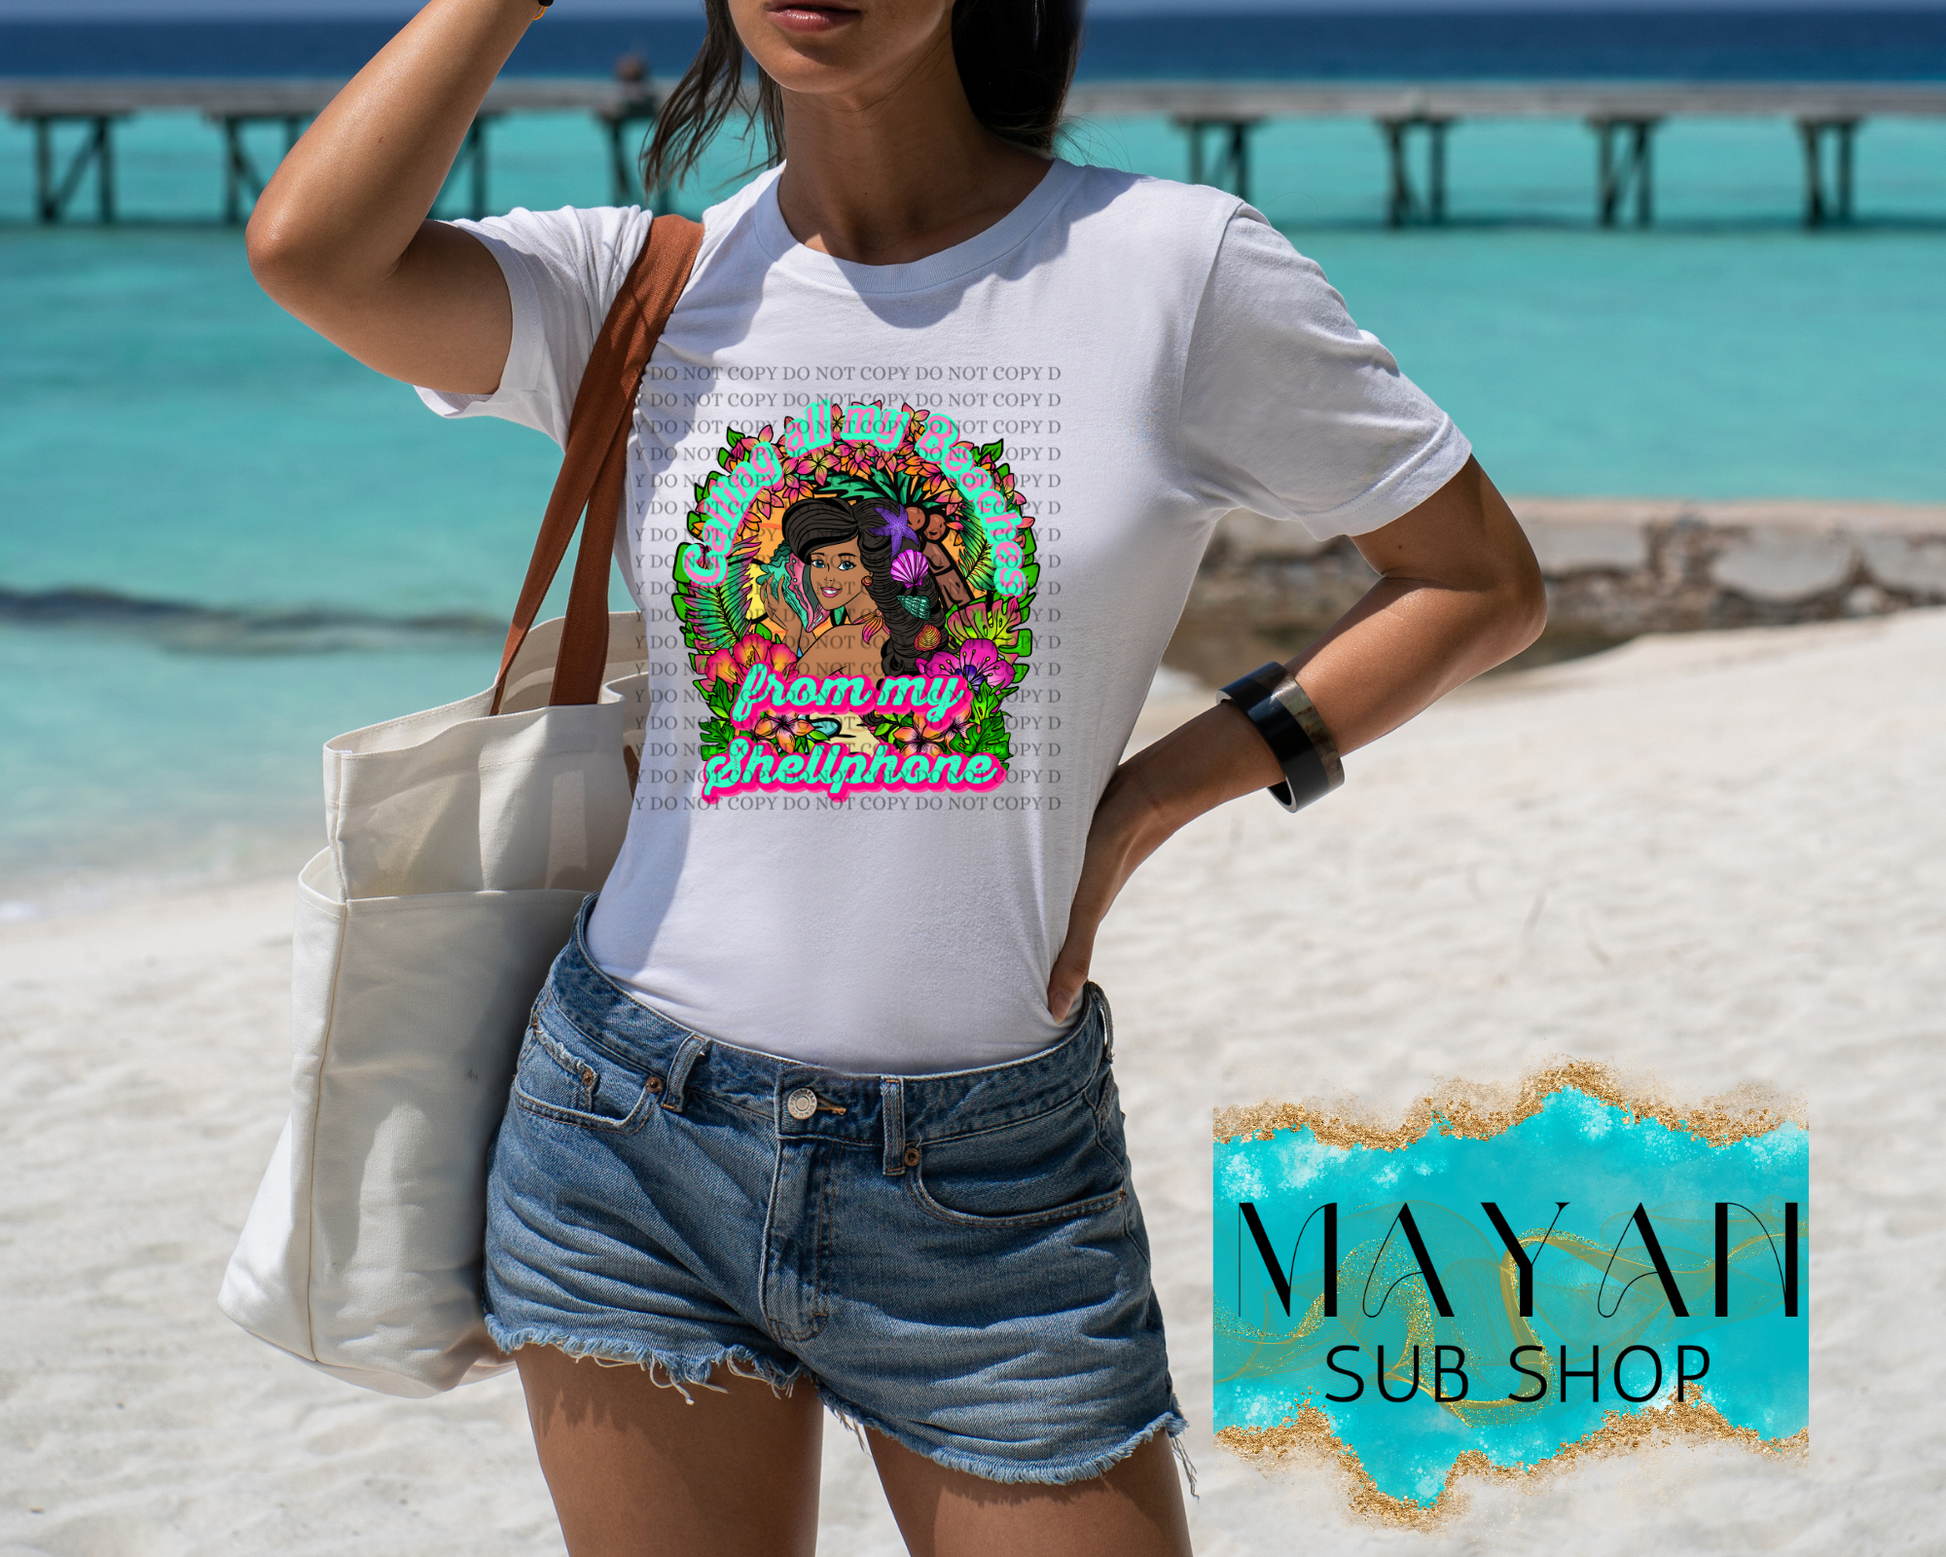 Calling All My Beaches Shirt - Mayan Sub Shop